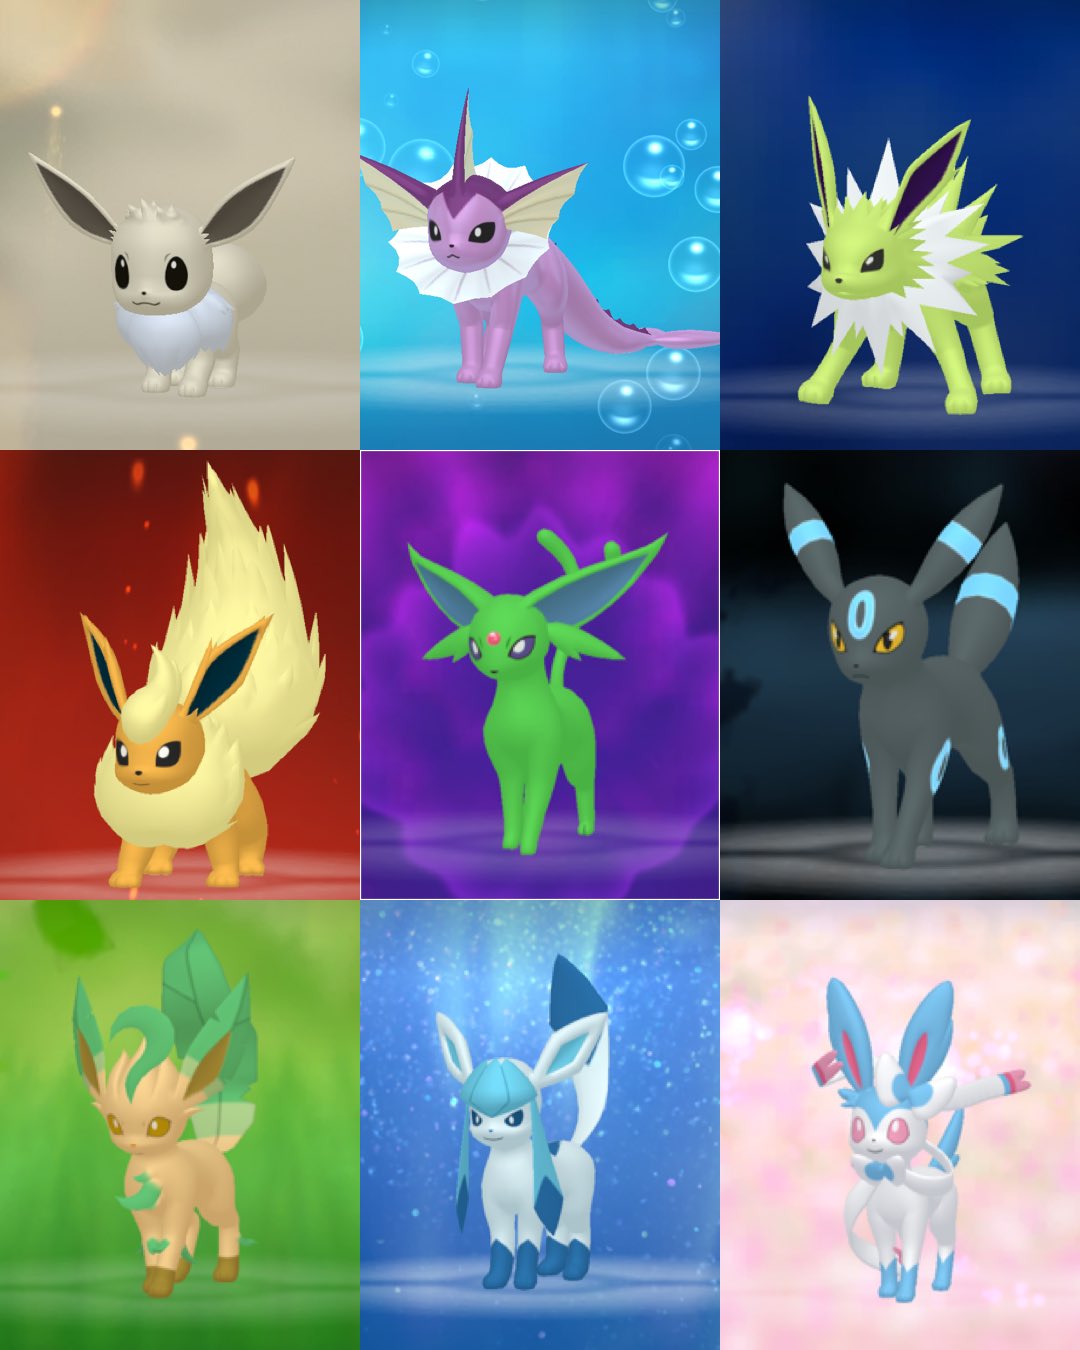 How to Get Shiny Eevee Evolutions in Pokémon GO?